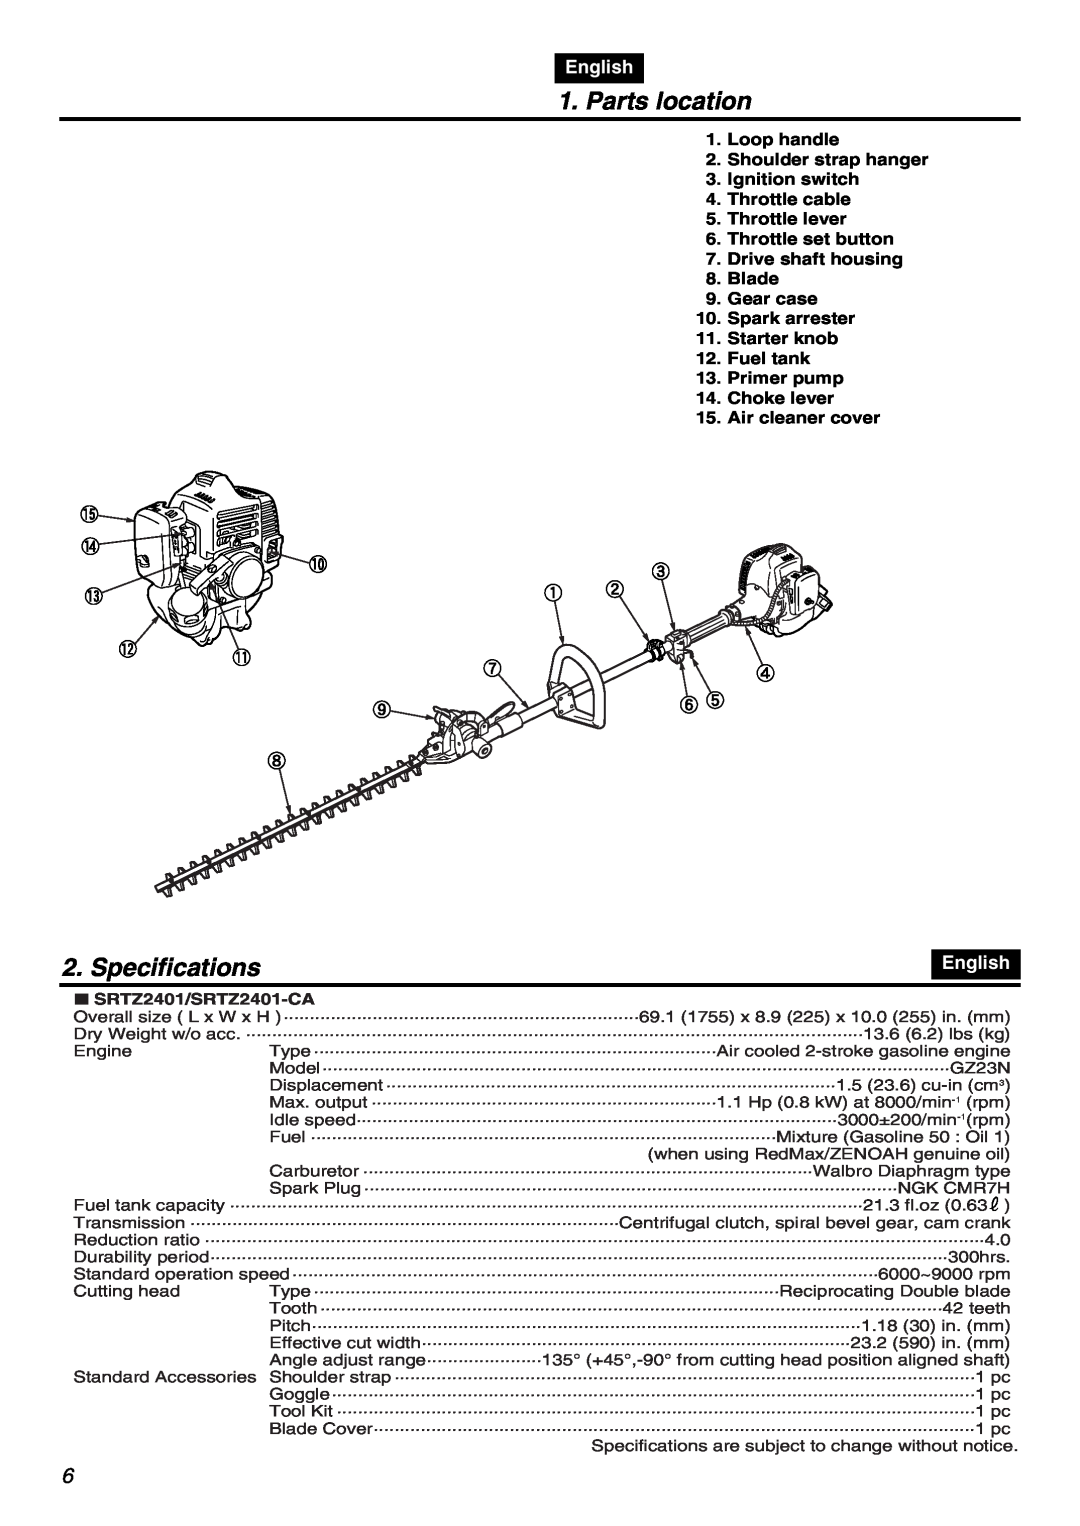 Univex SRTZ2401 Parts location, Specifications, English, Loop handle 2.Shoulder strap hanger, Primer pump 14.Choke lever 